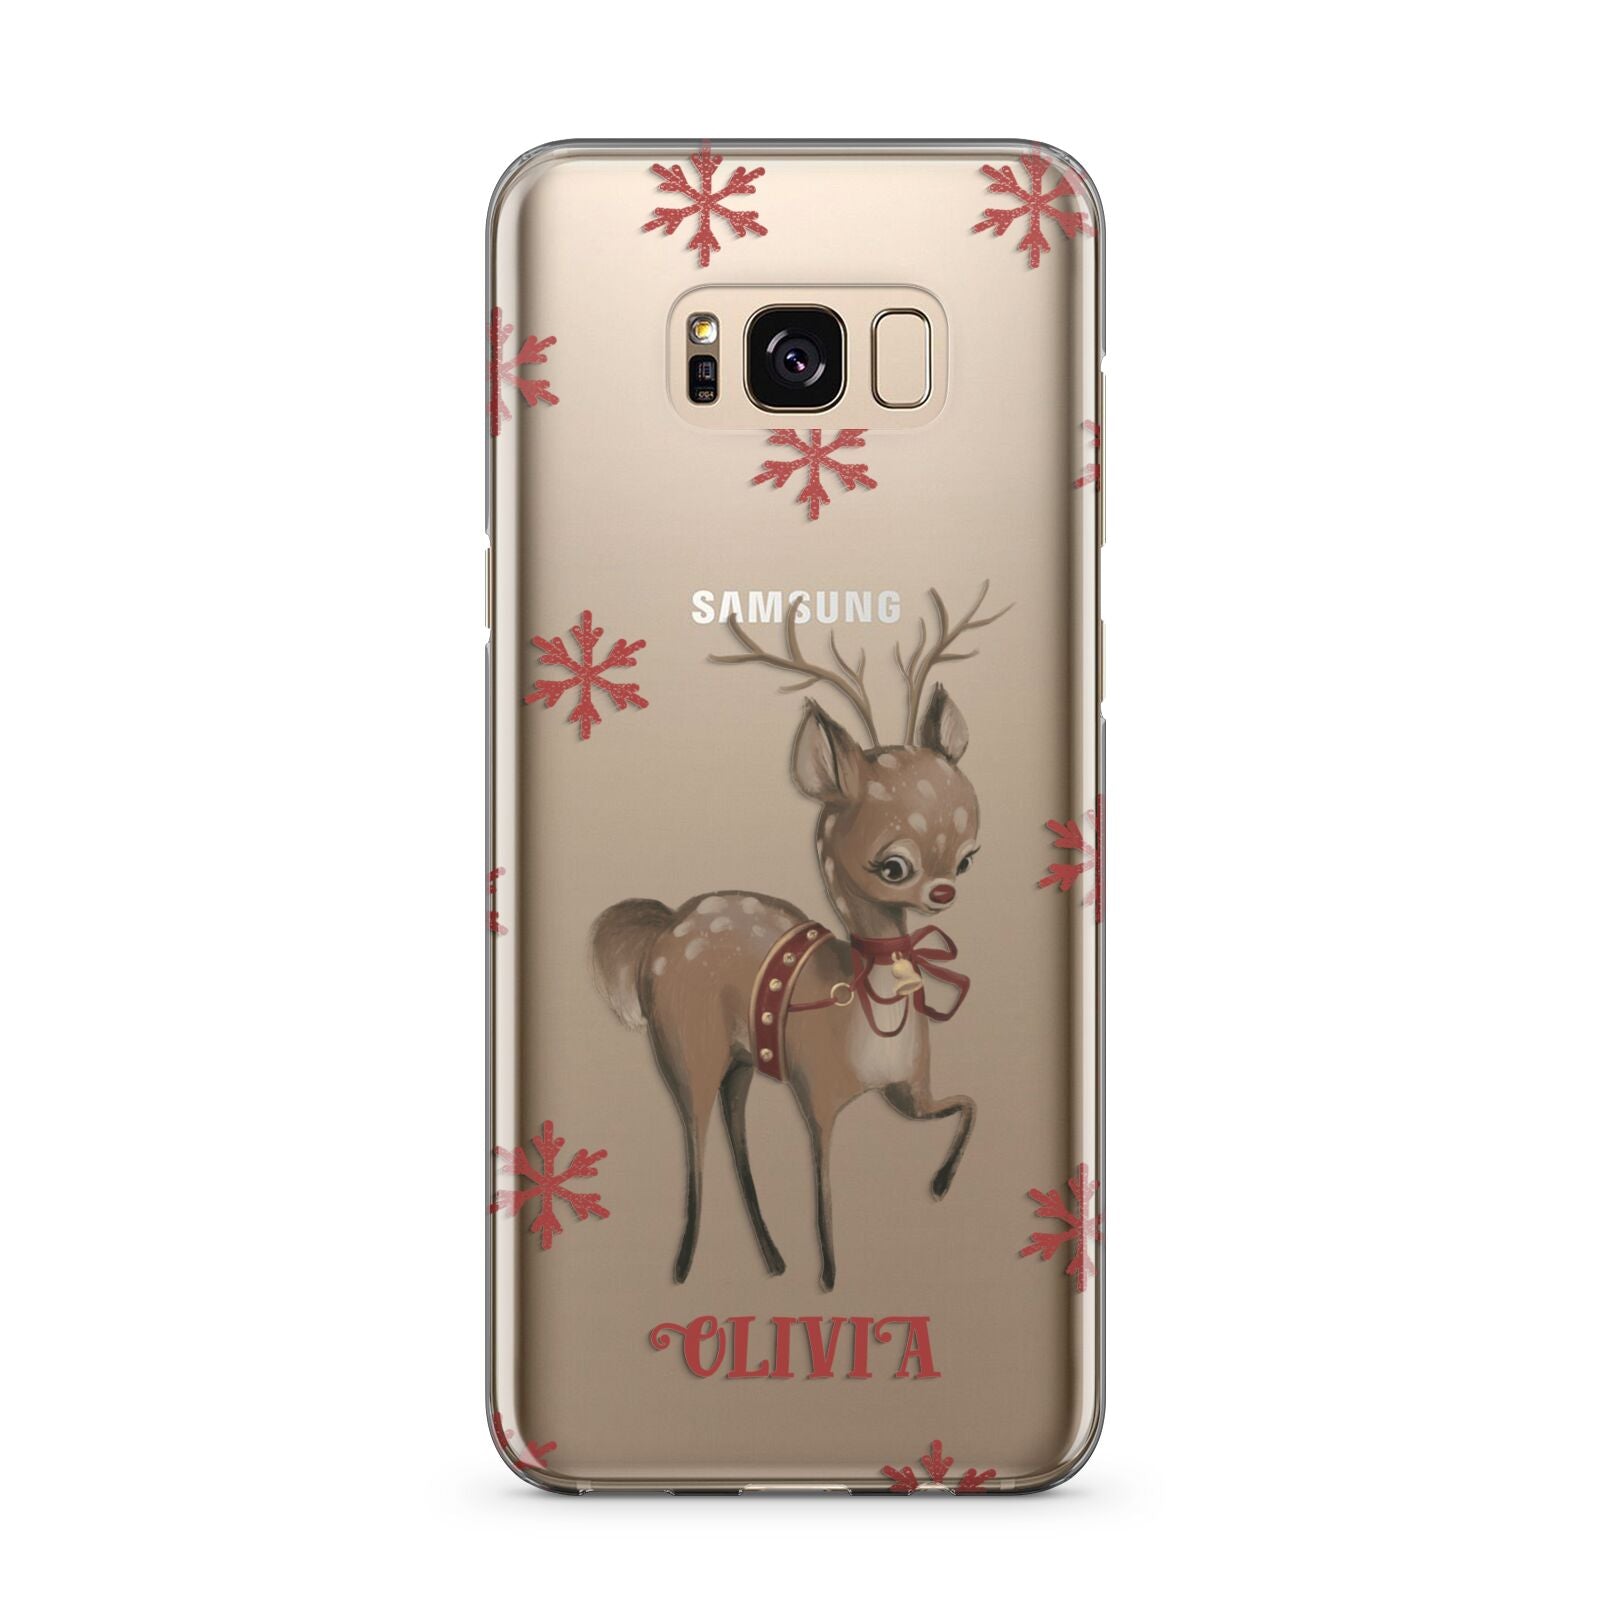 Rudolph Delivery Samsung Galaxy S8 Plus Case